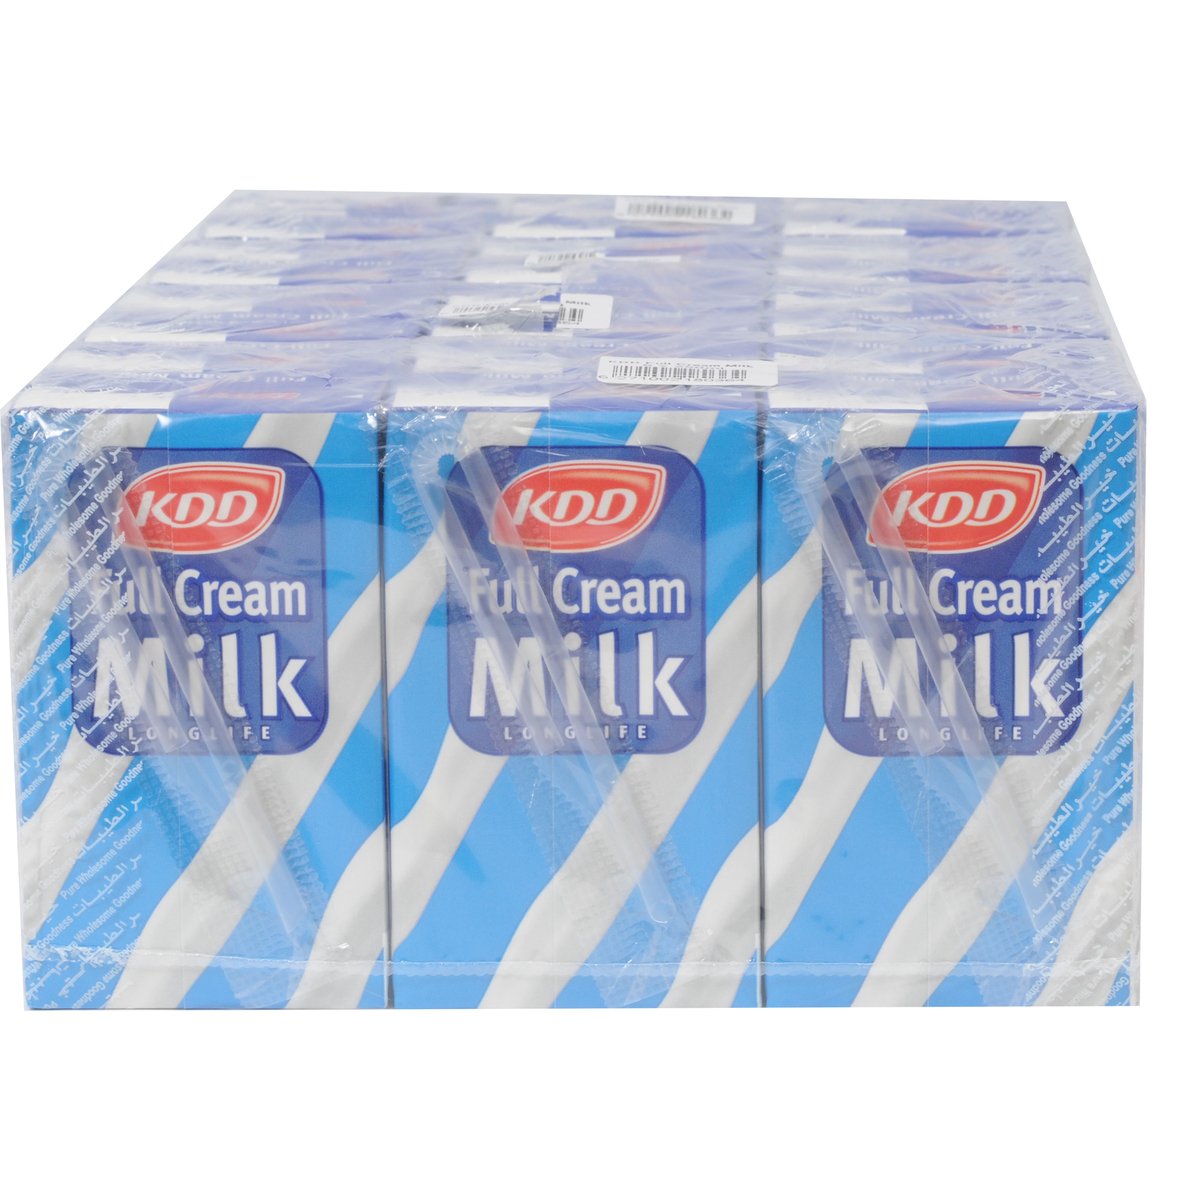 KDD Long Life Full Cream Milk 6 x 250ml